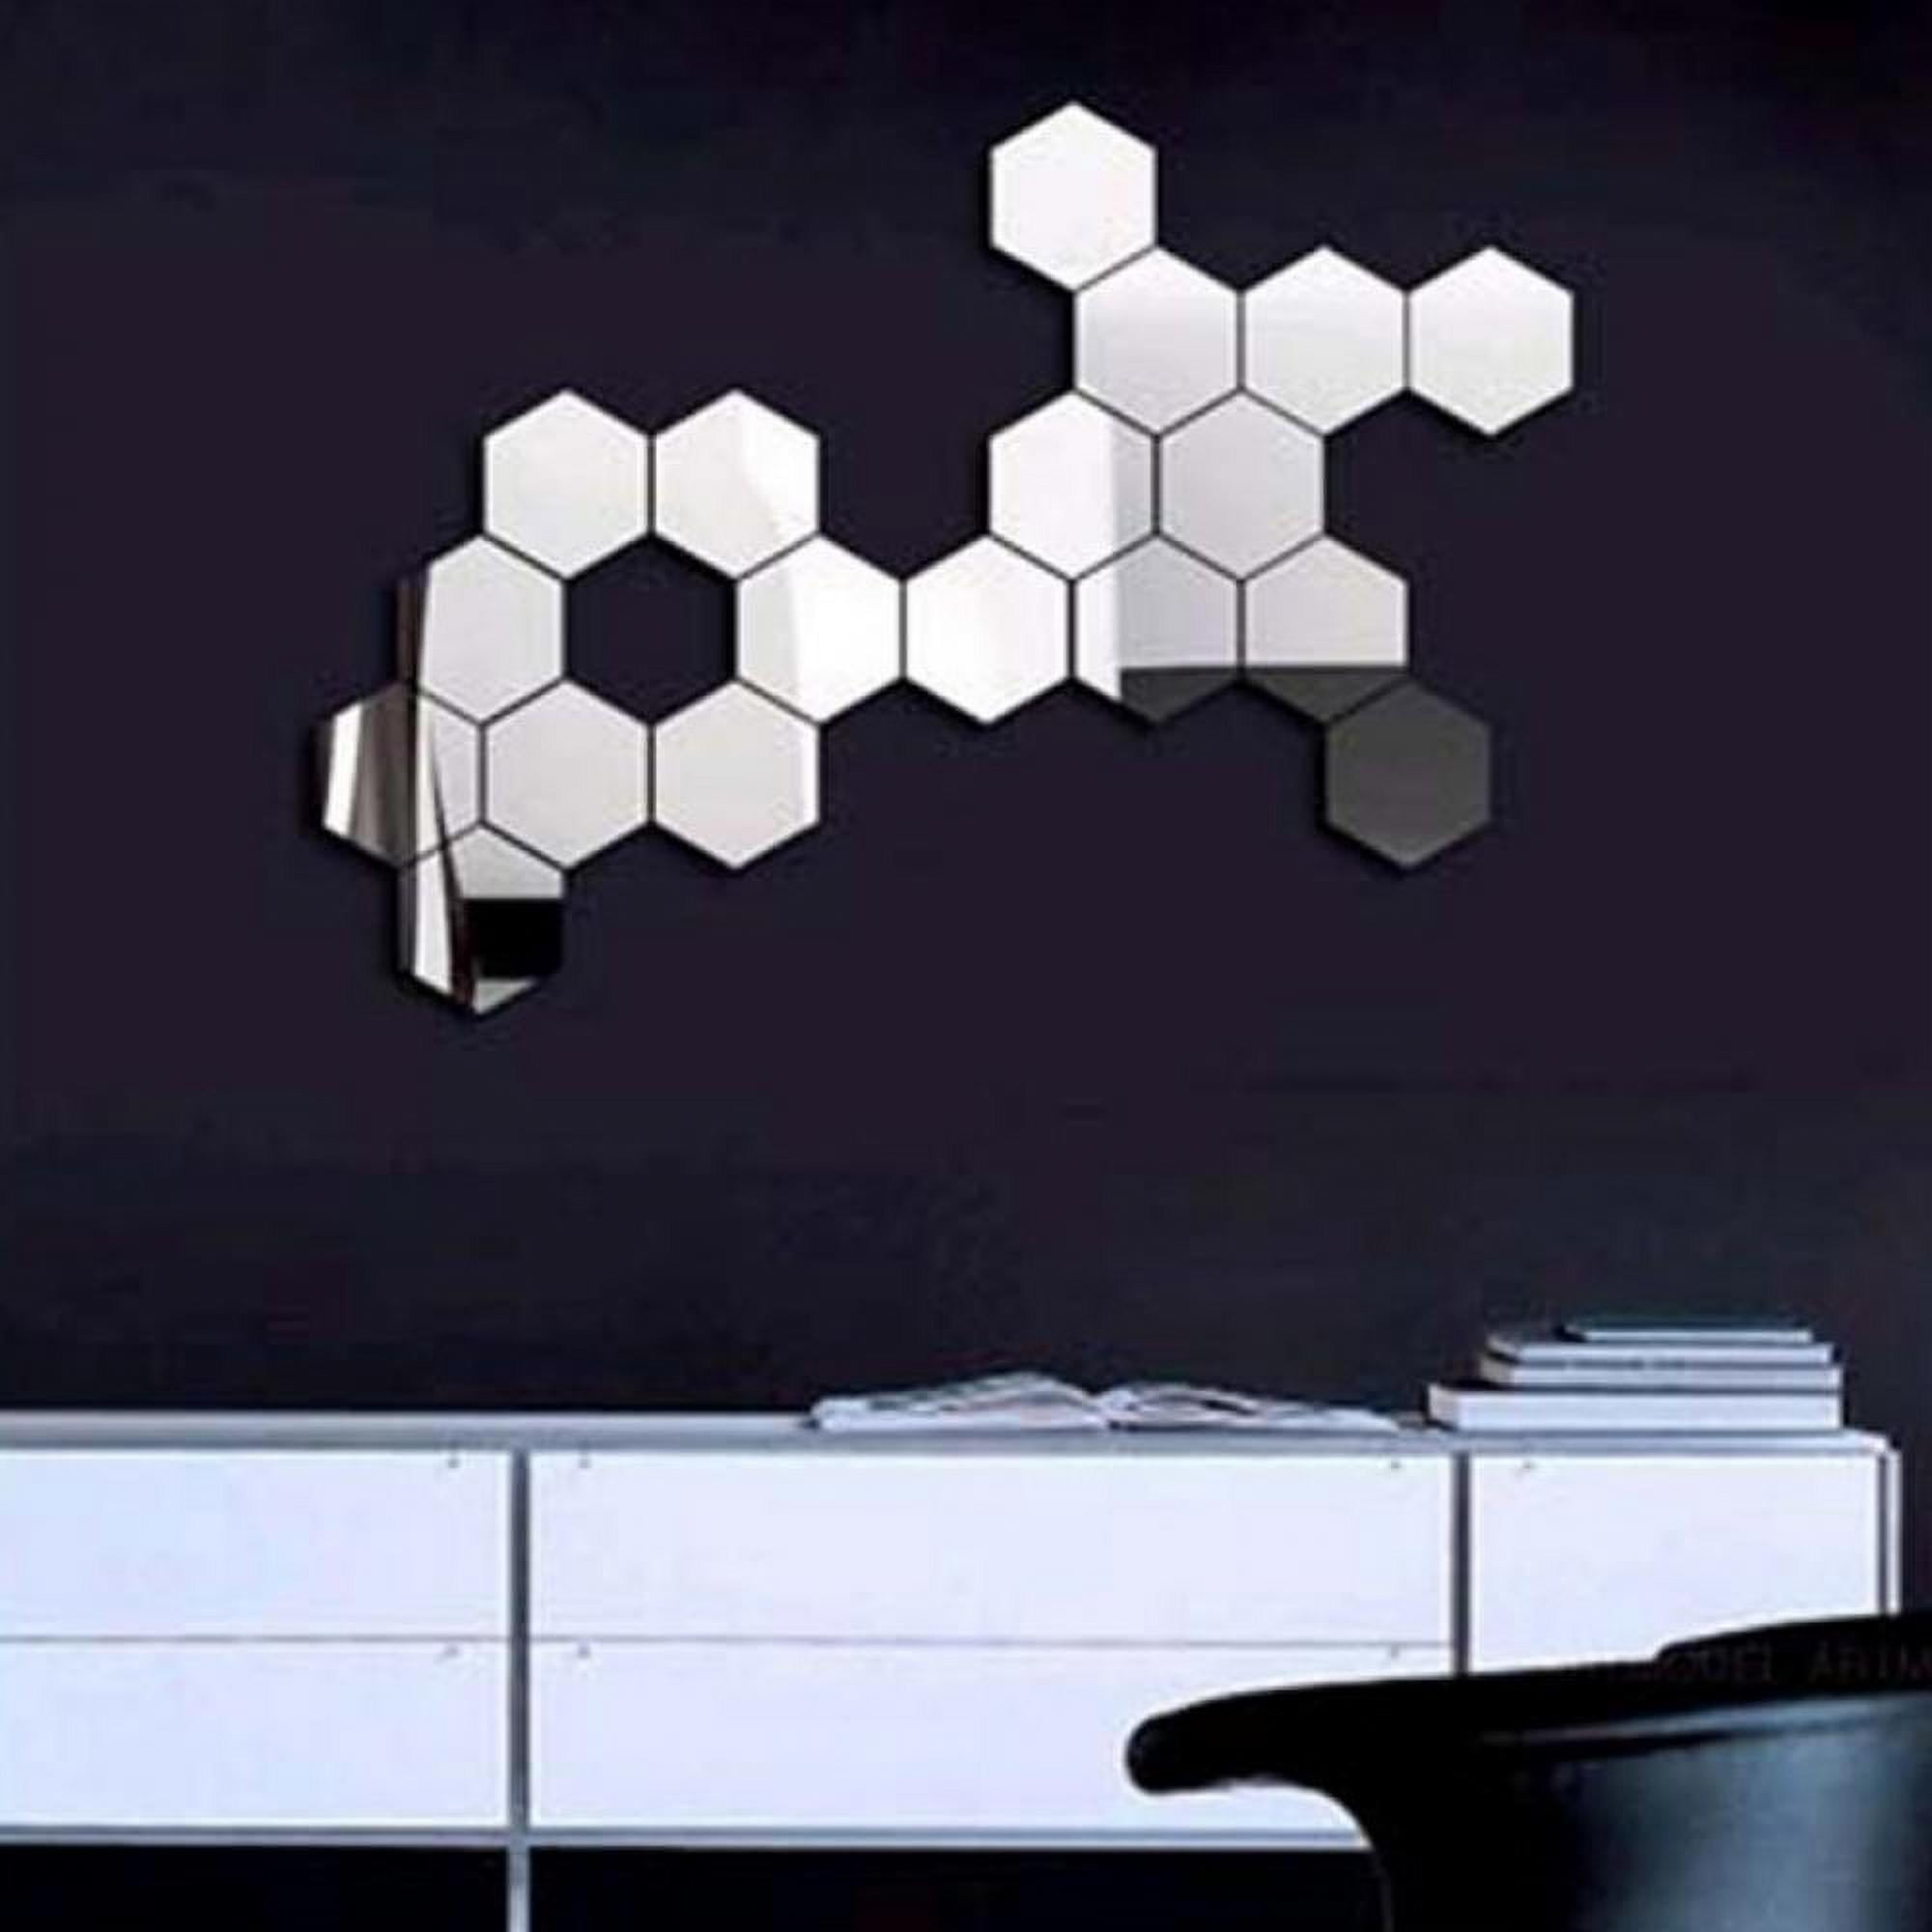 3D Hexagon Acrylic Mirror Wall Stickers Art Wall Decor Living Room Mirrored  ❥ —